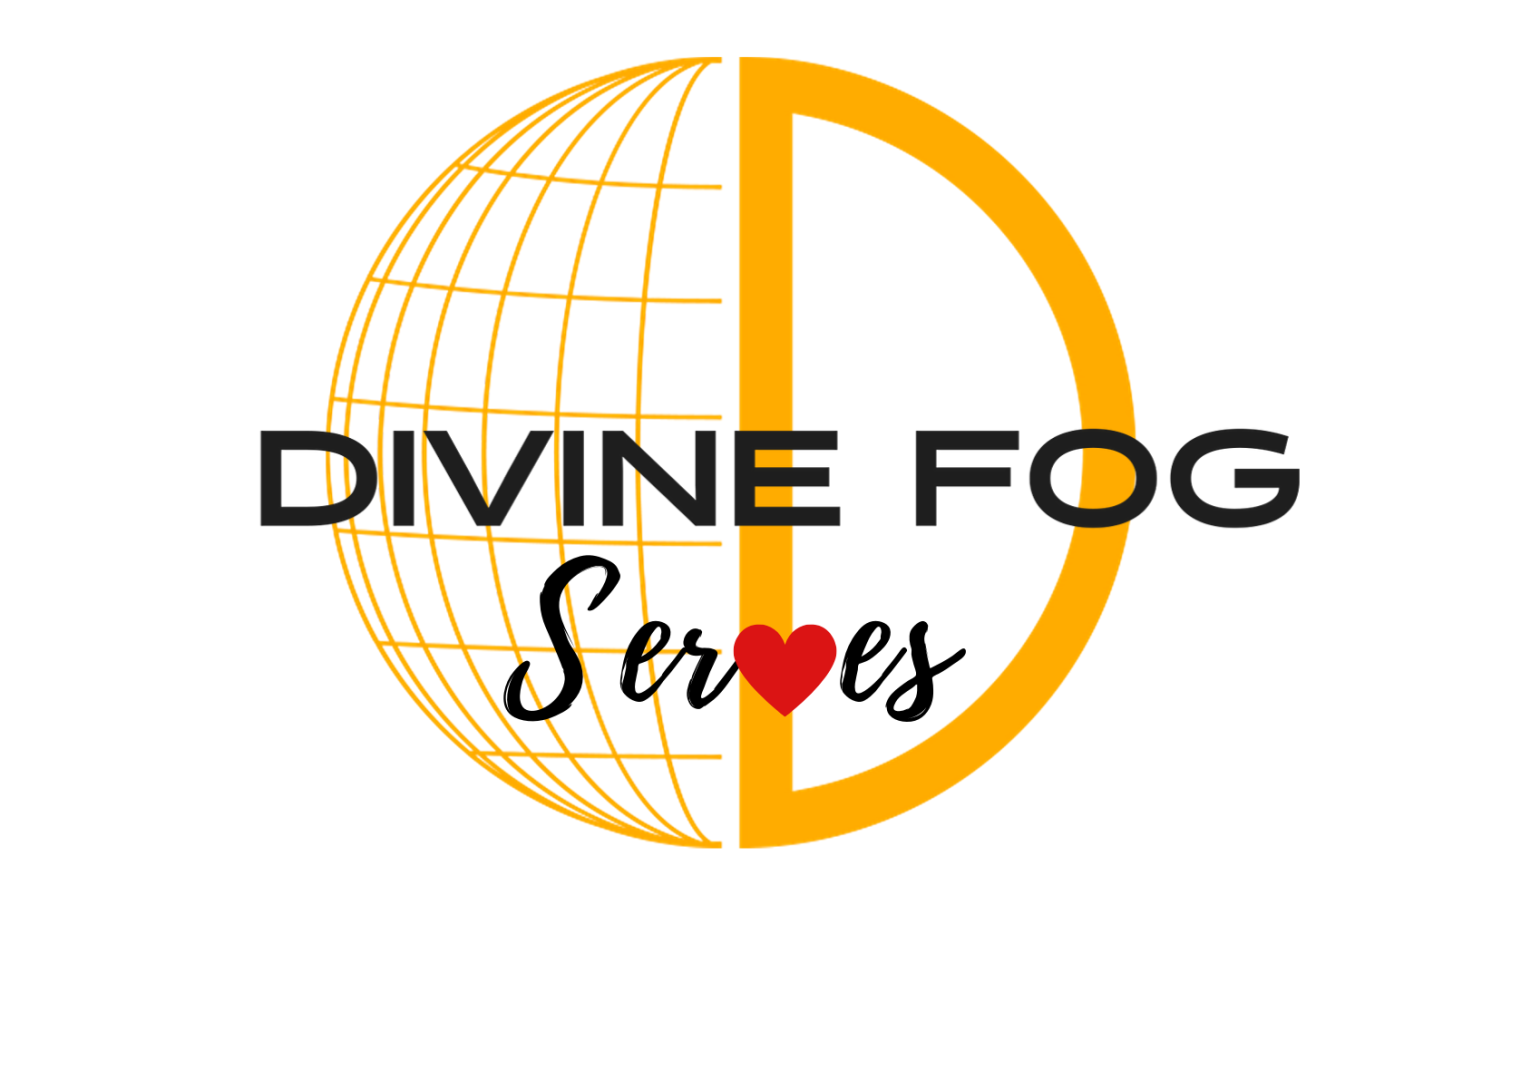 Divine fog Serves _ (2) (2)